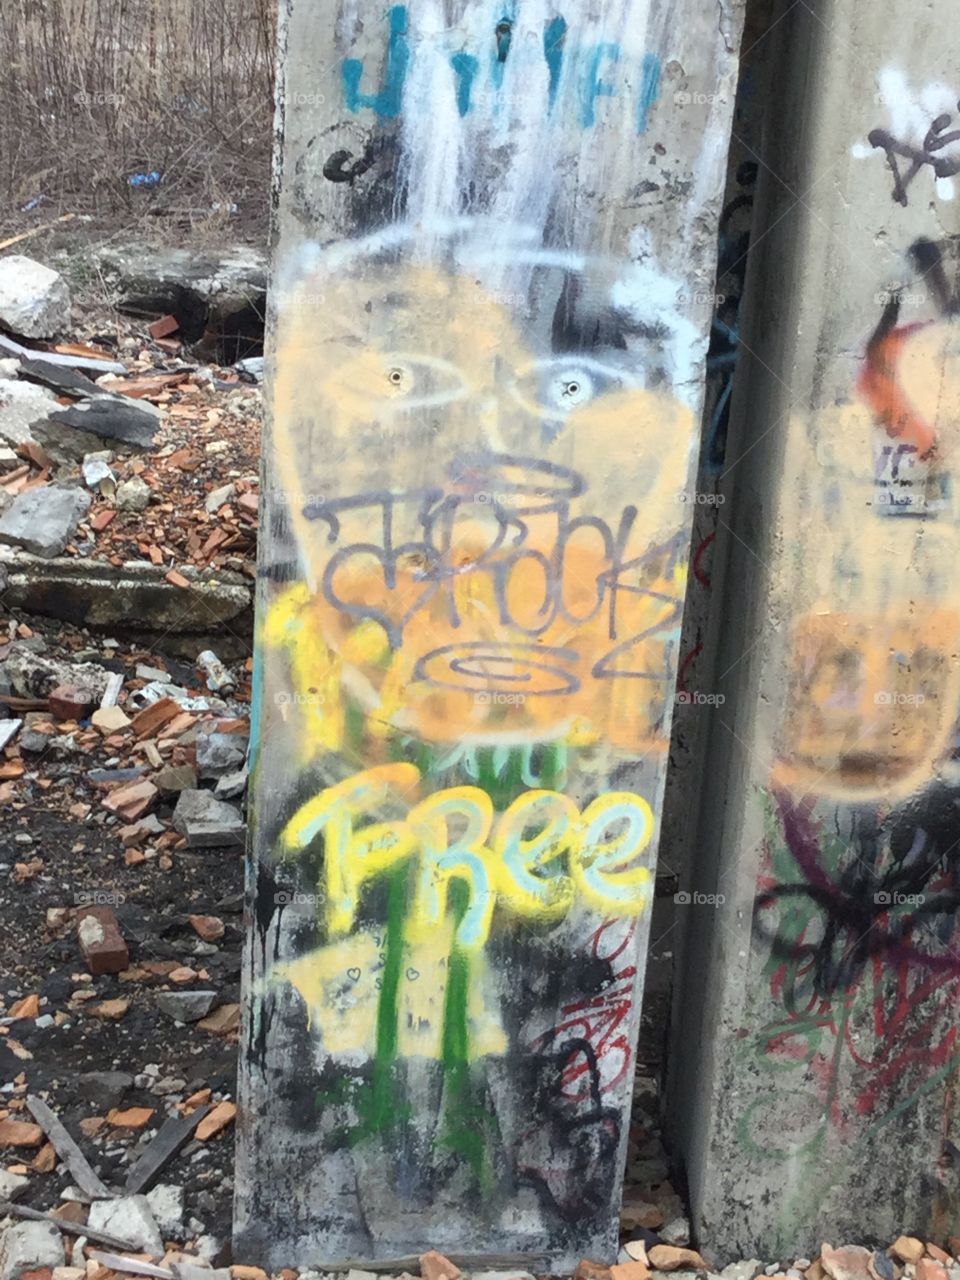 More of Milwaukee’s finest graffiti